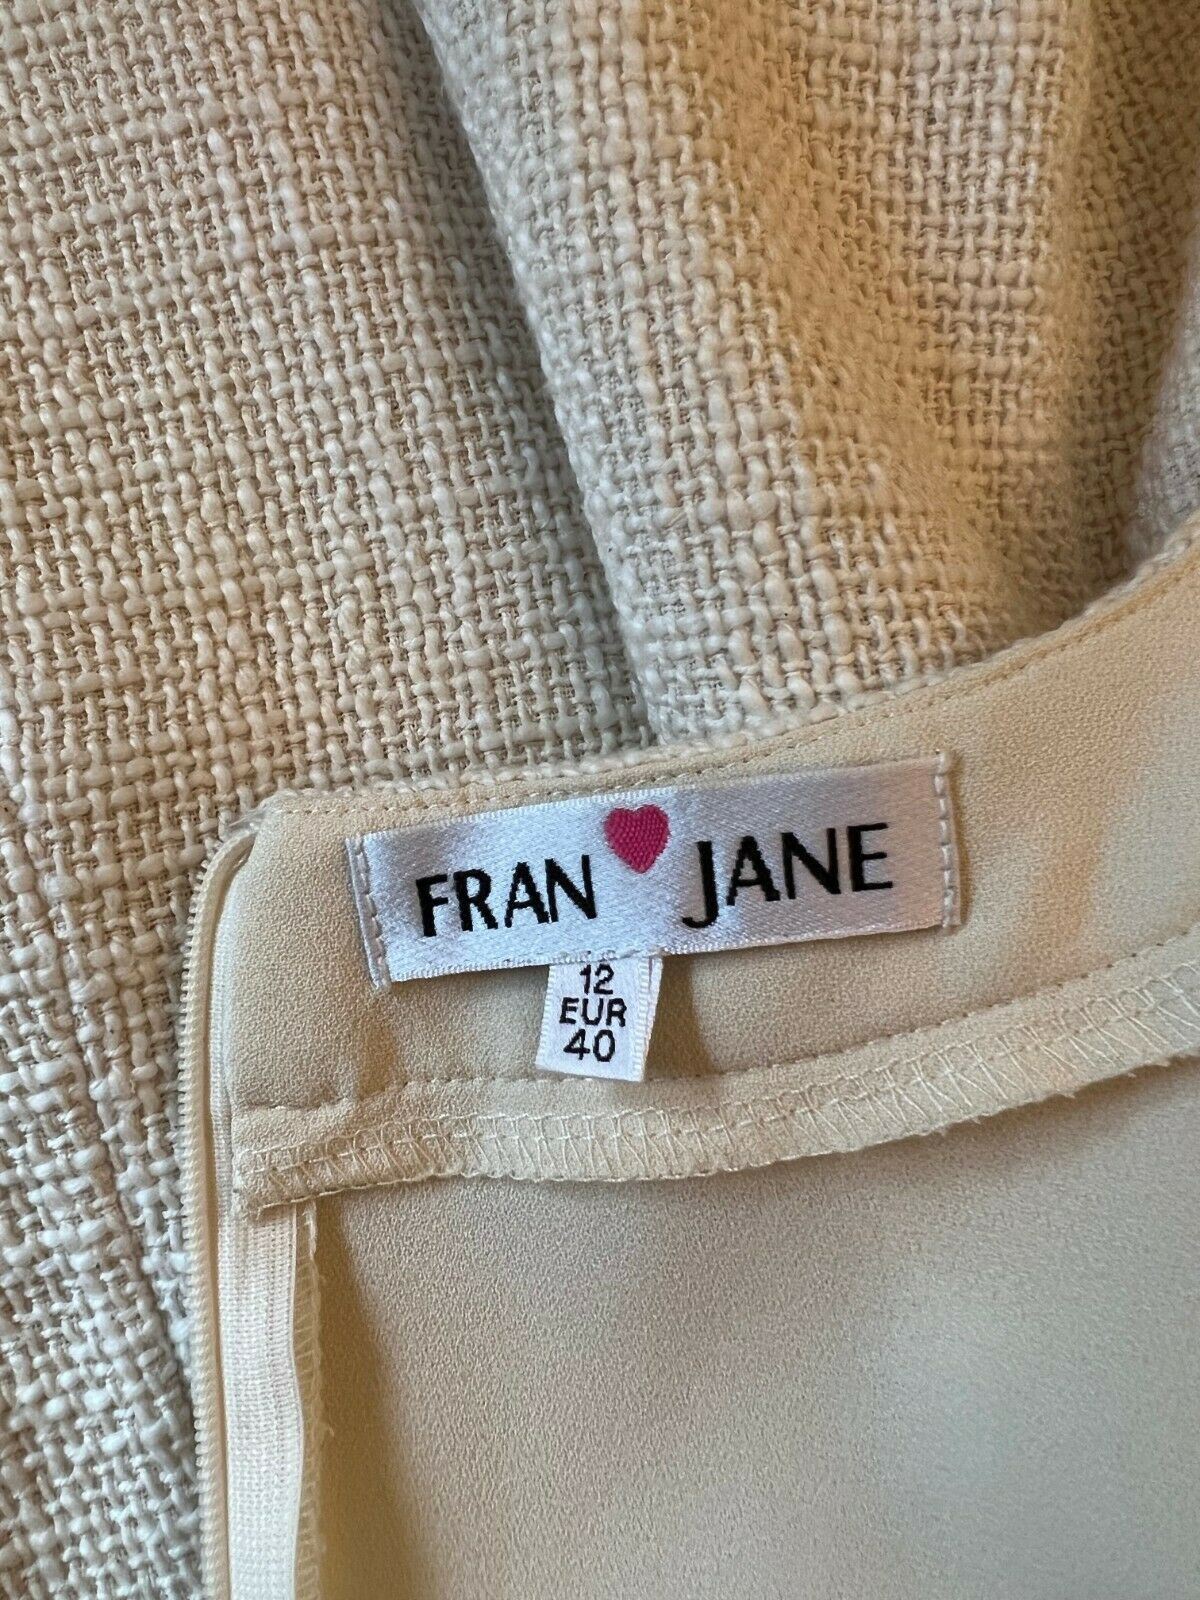 Fran Jane Cream Cotton Boucle Bow Detail Sleeveless Pencil Dress UK 12 US 8 EU 40 Timeless Fashions